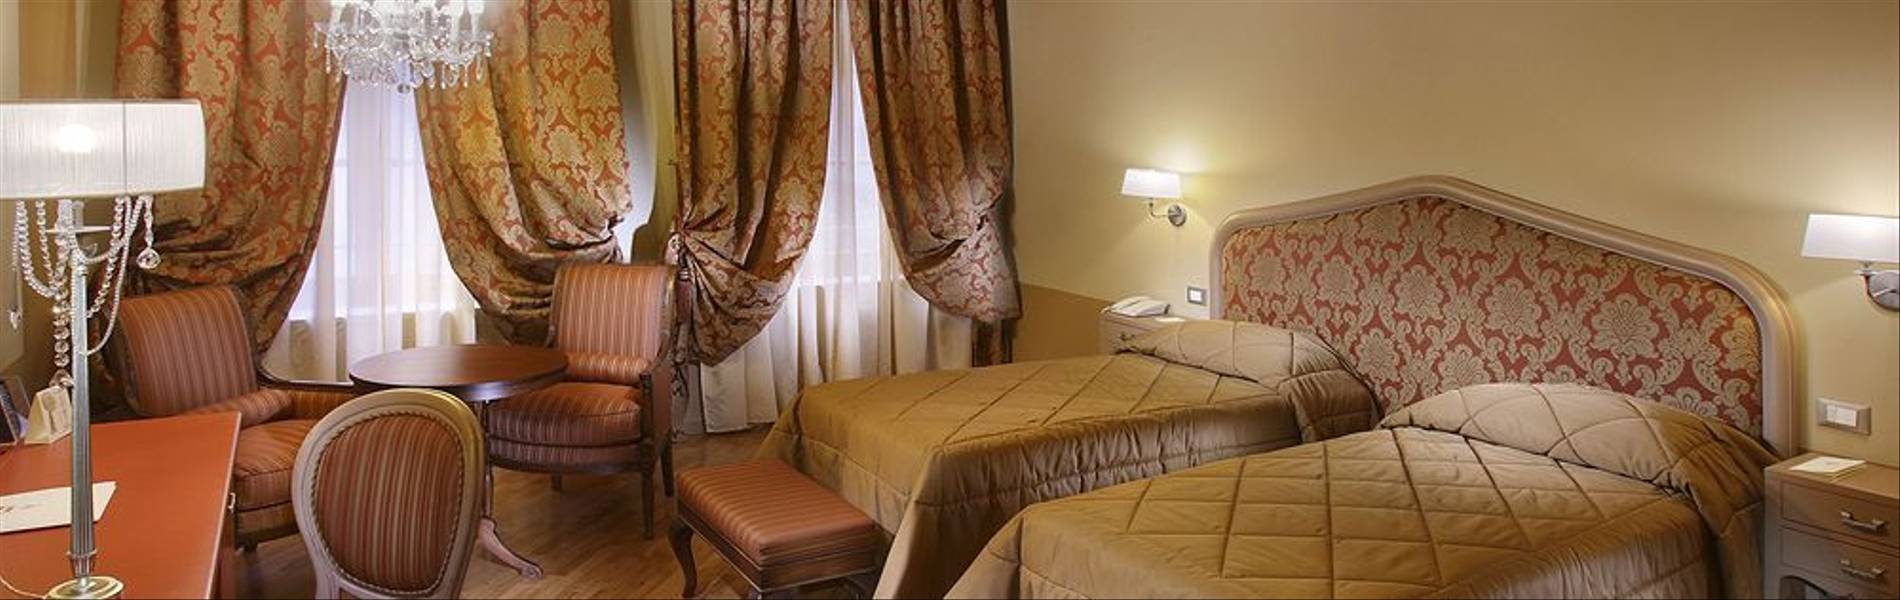 09-Hotel San Luca Palace.jpg